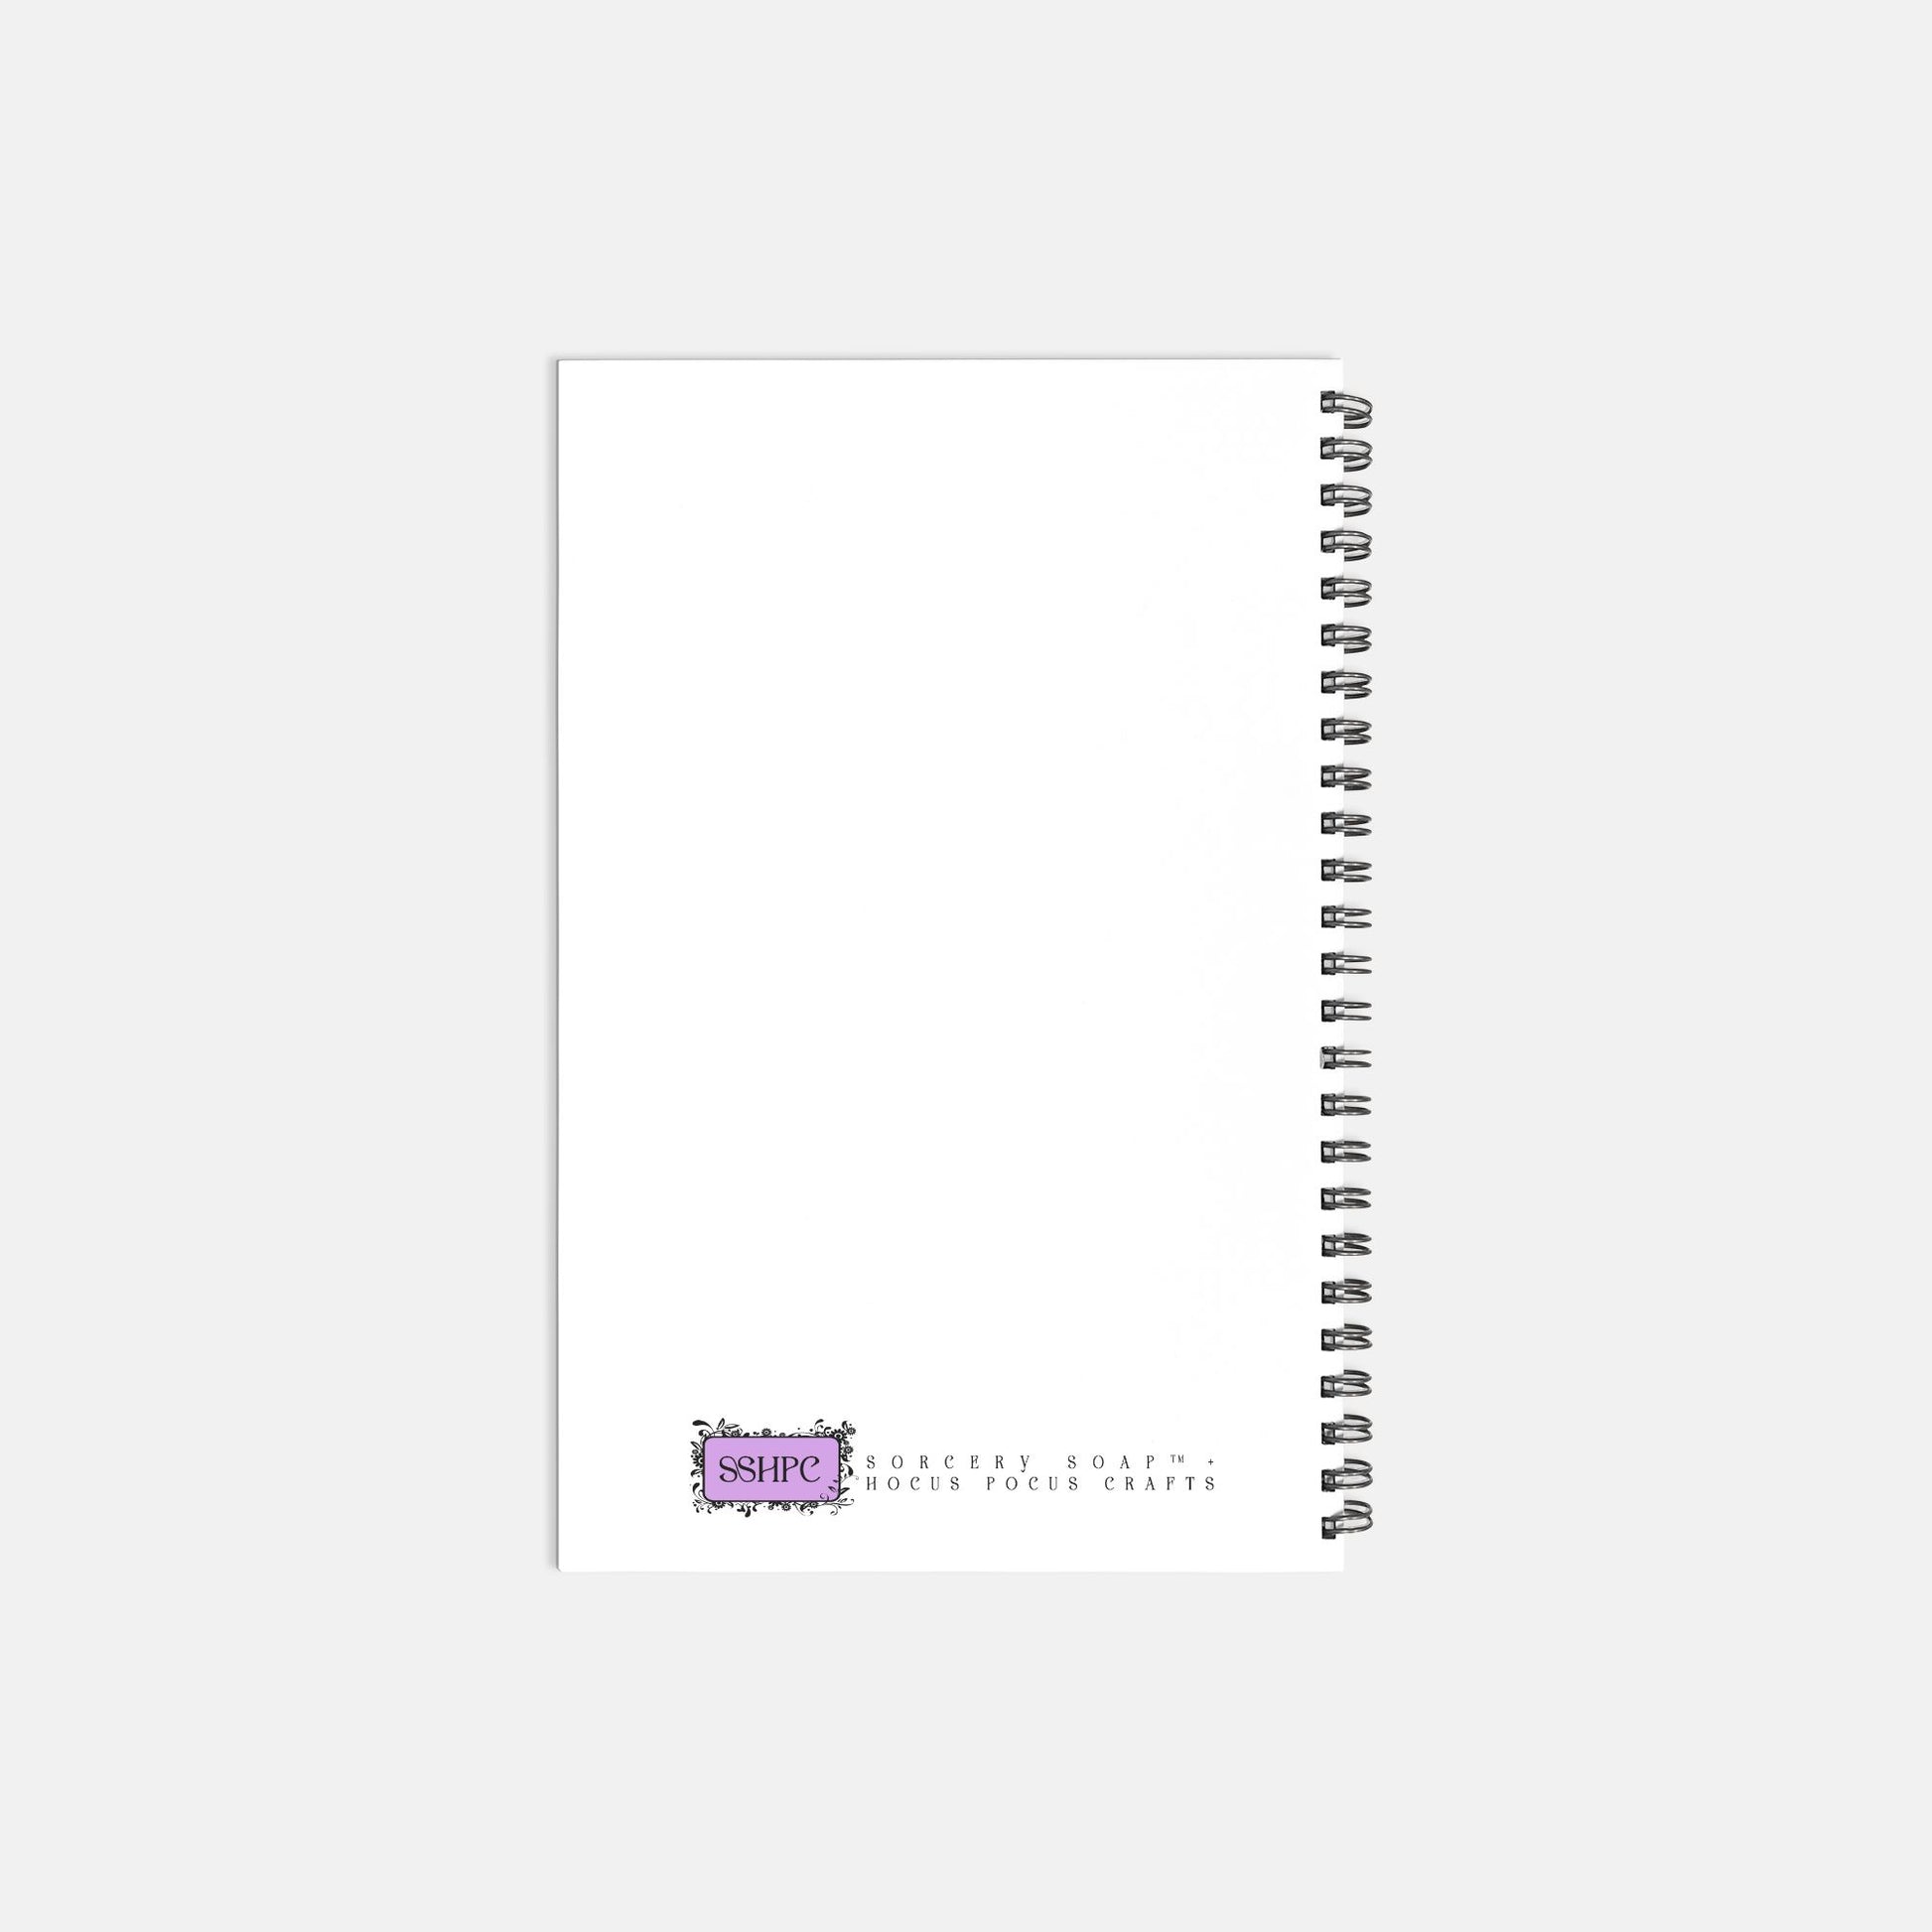 Black Hat Knowledge Notebook Hardcover Spiral 5.5 x 8.5